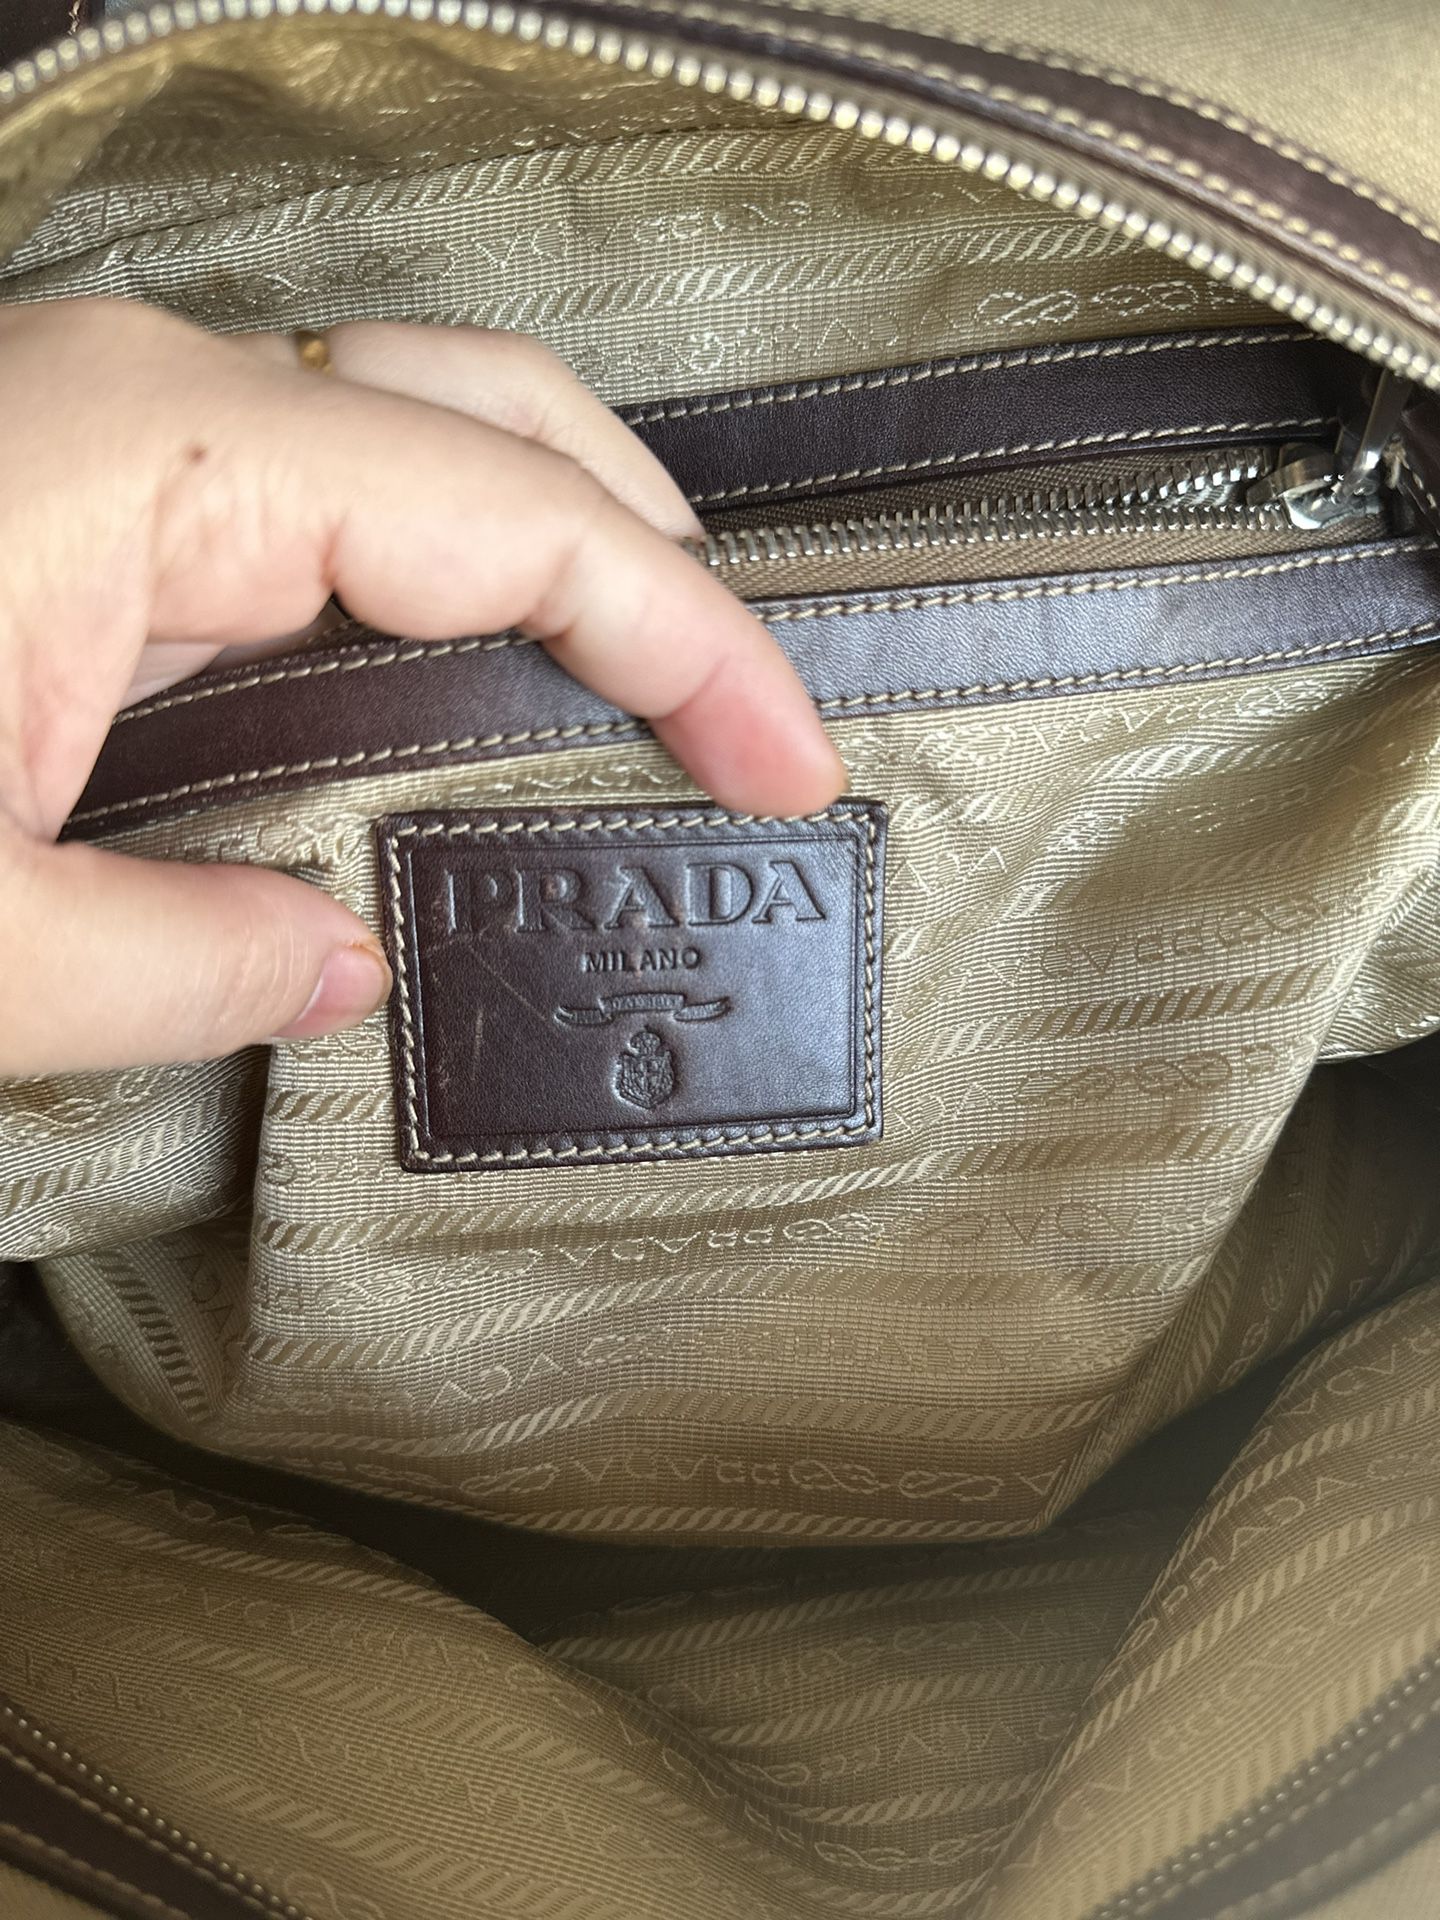 Prada Shoulder Bag for Sale in Fairfield, CA - OfferUp